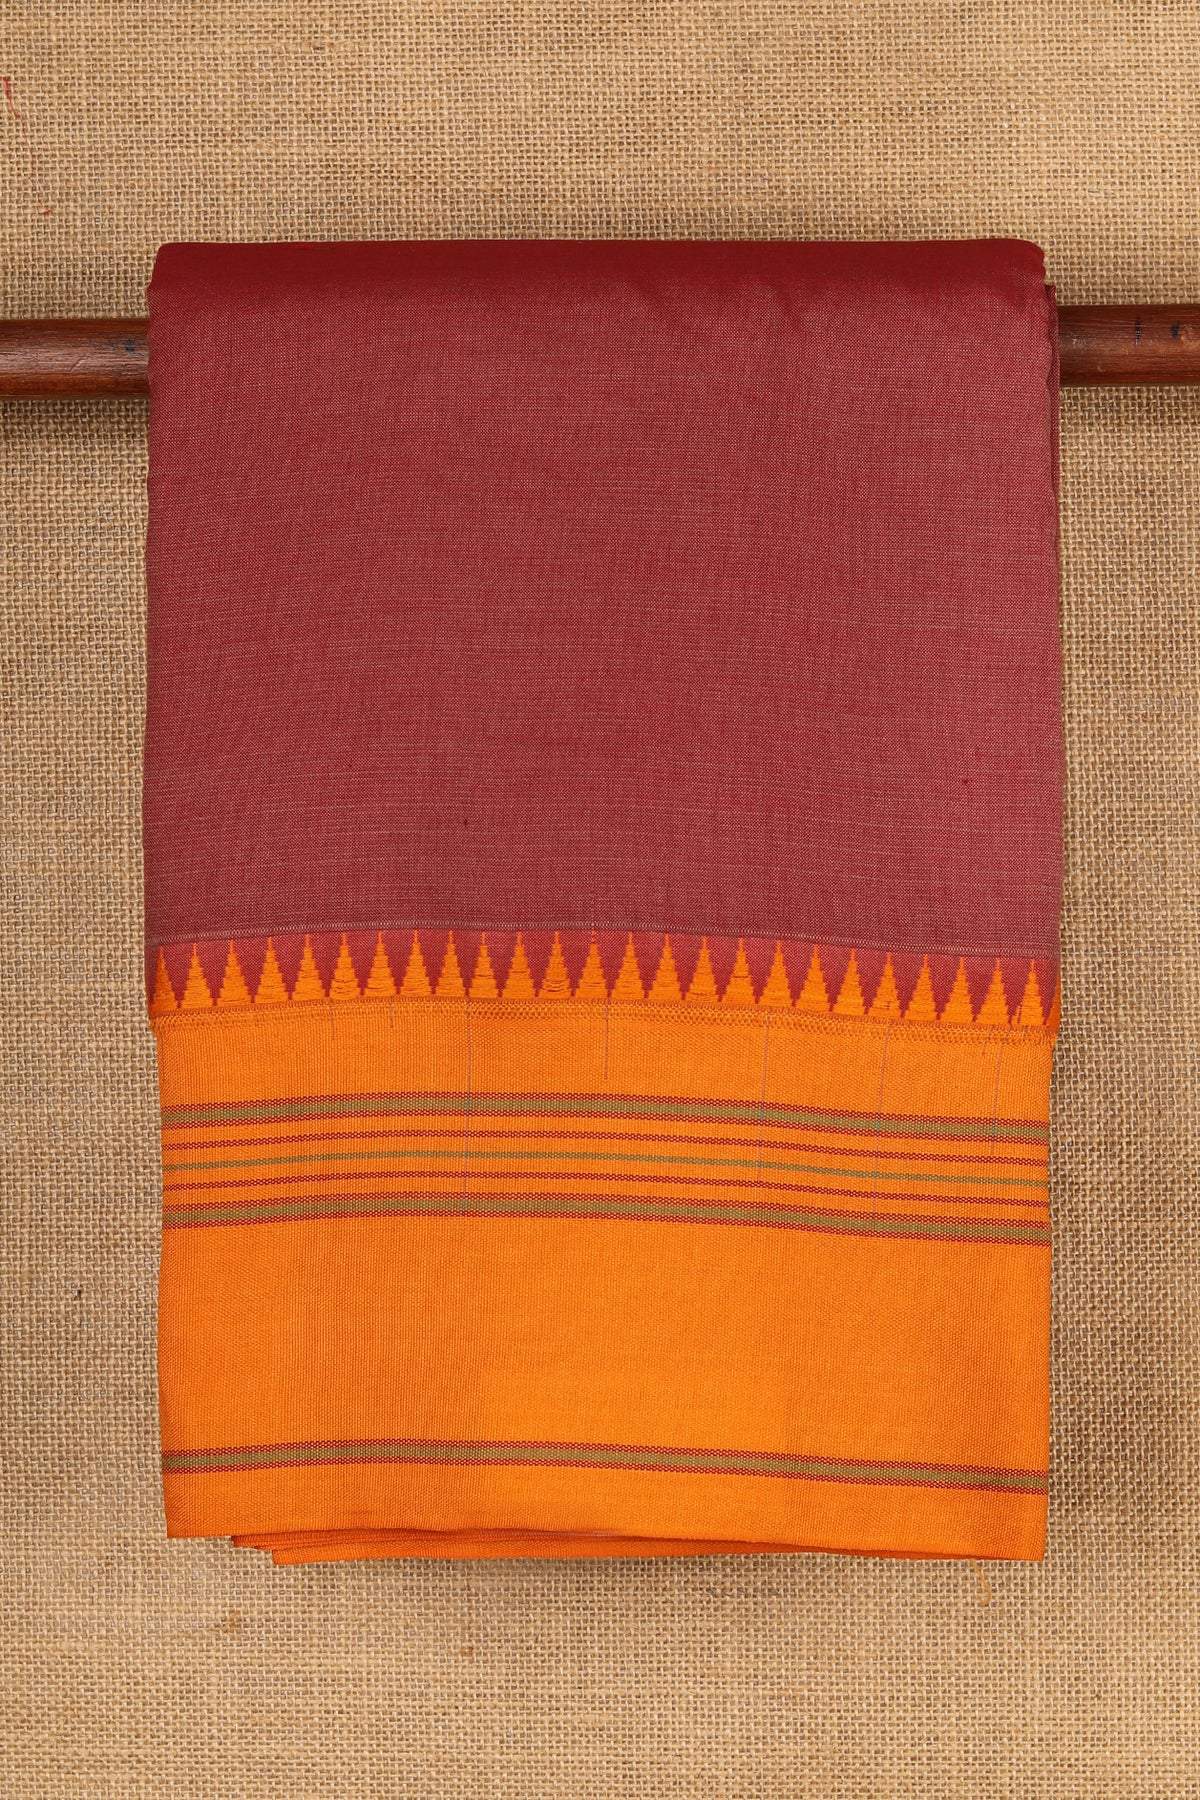 Thread Work Big Border In Plain Blush Red Dharwad Cotton Saree